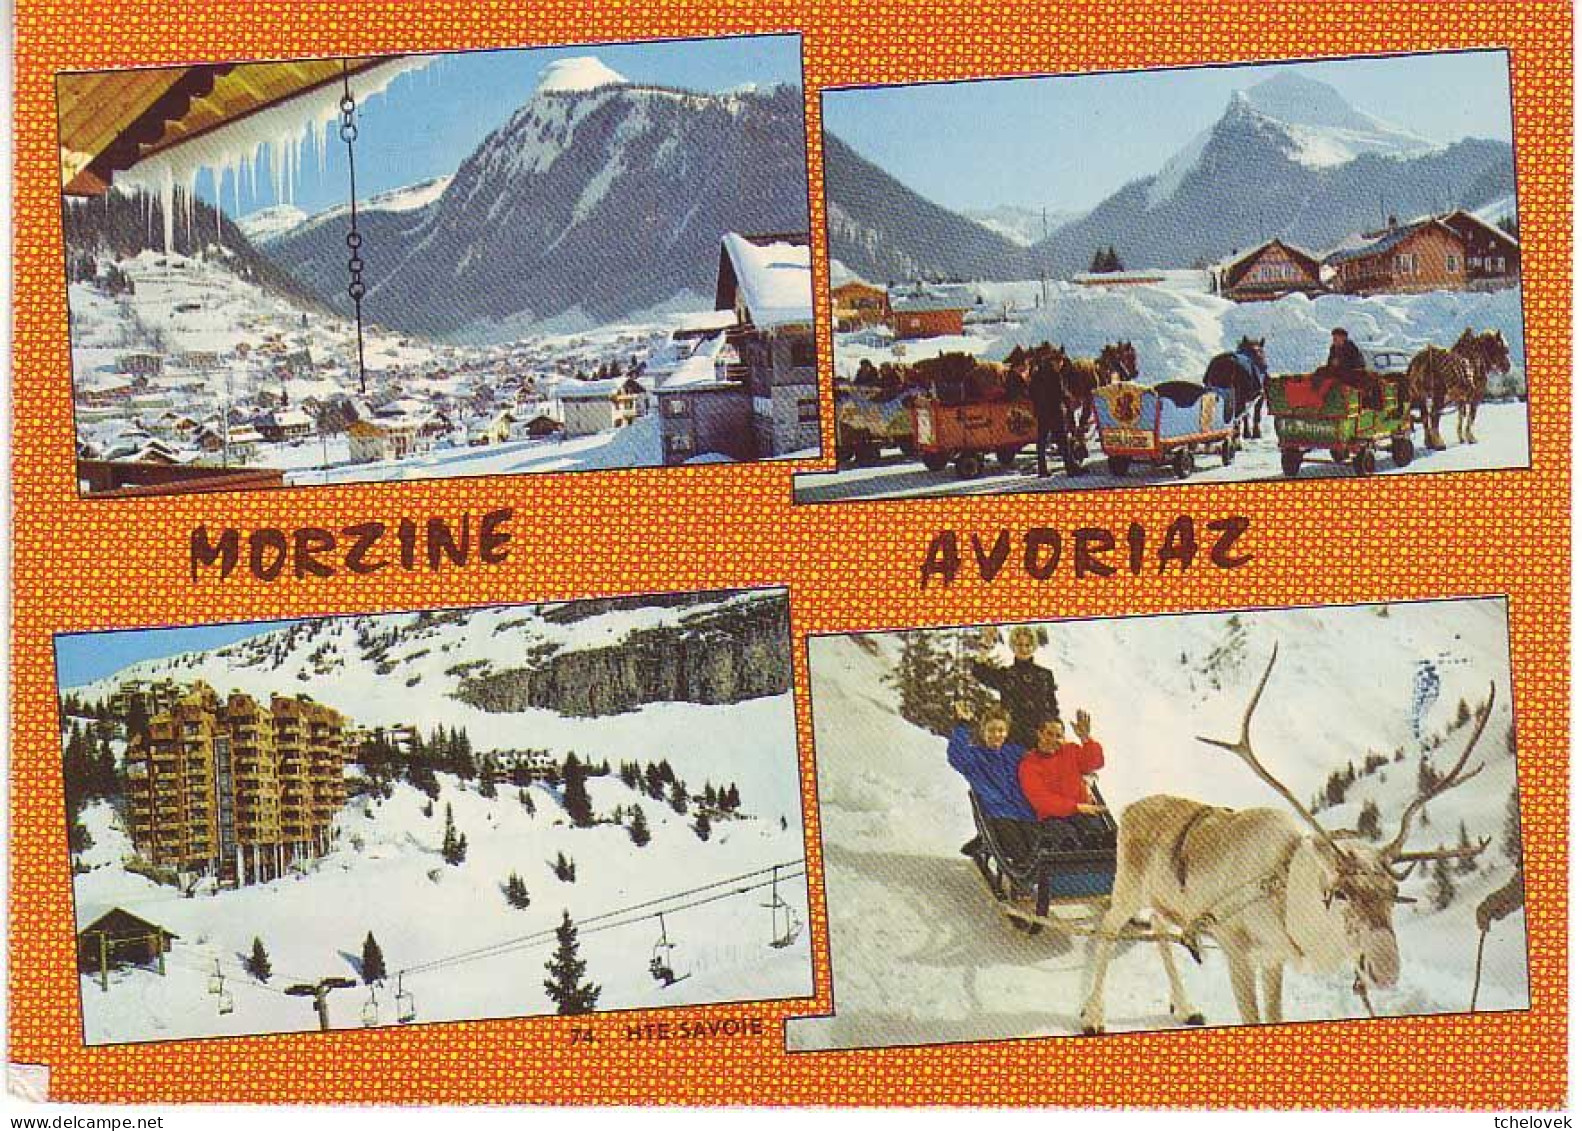 (74). Morzine Avoriaz 1981 renes attelage & Gorge de la Dranse Morzine 1949 & (2)  & (3) & E 6731